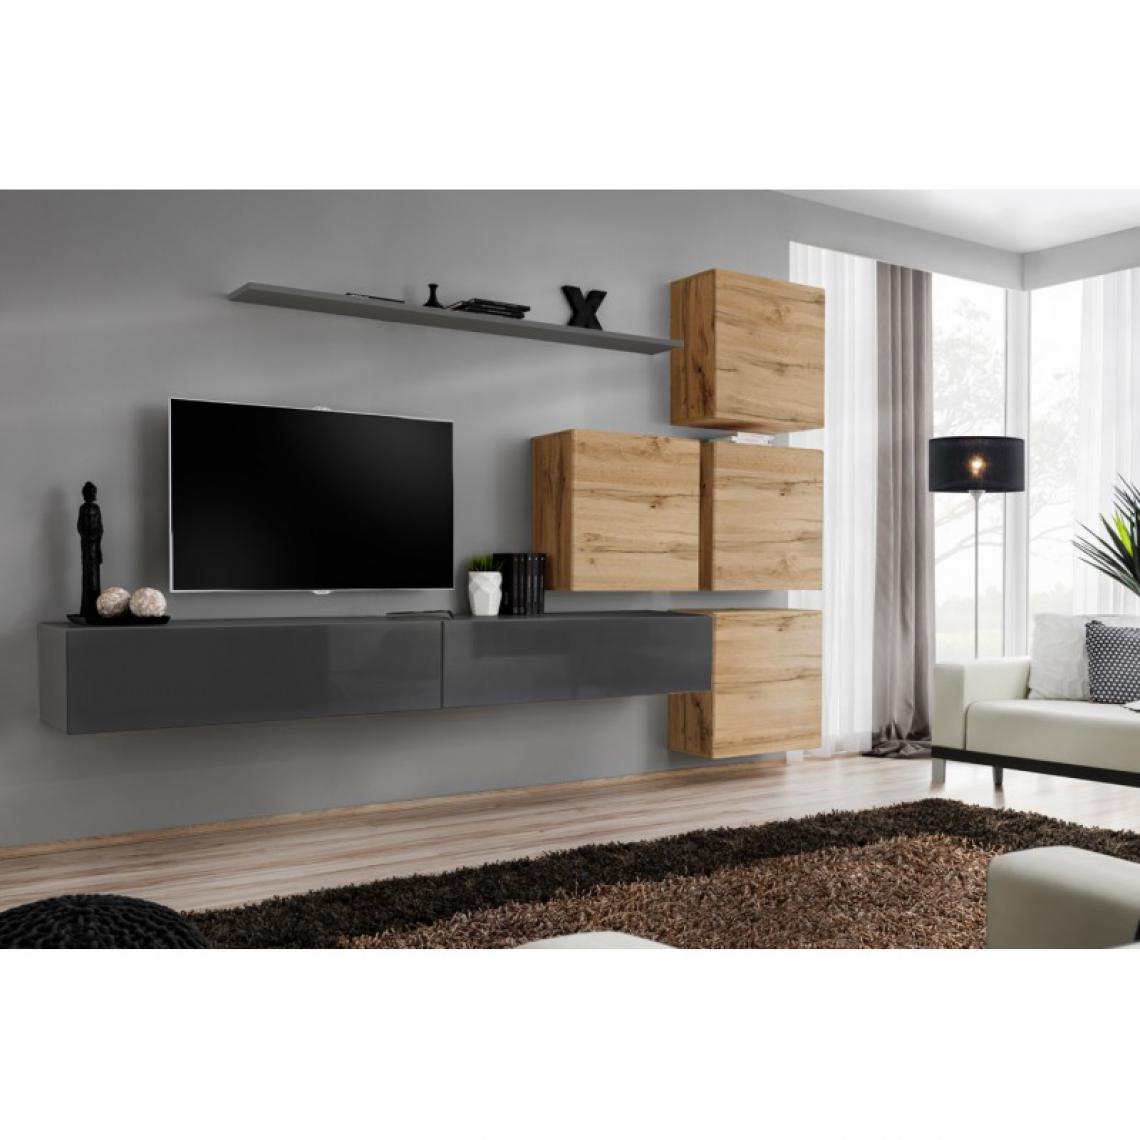 Ac-Deco - Meuble TV Mural Design Switch IX 310cm Gris & Naturel - Meubles TV, Hi-Fi